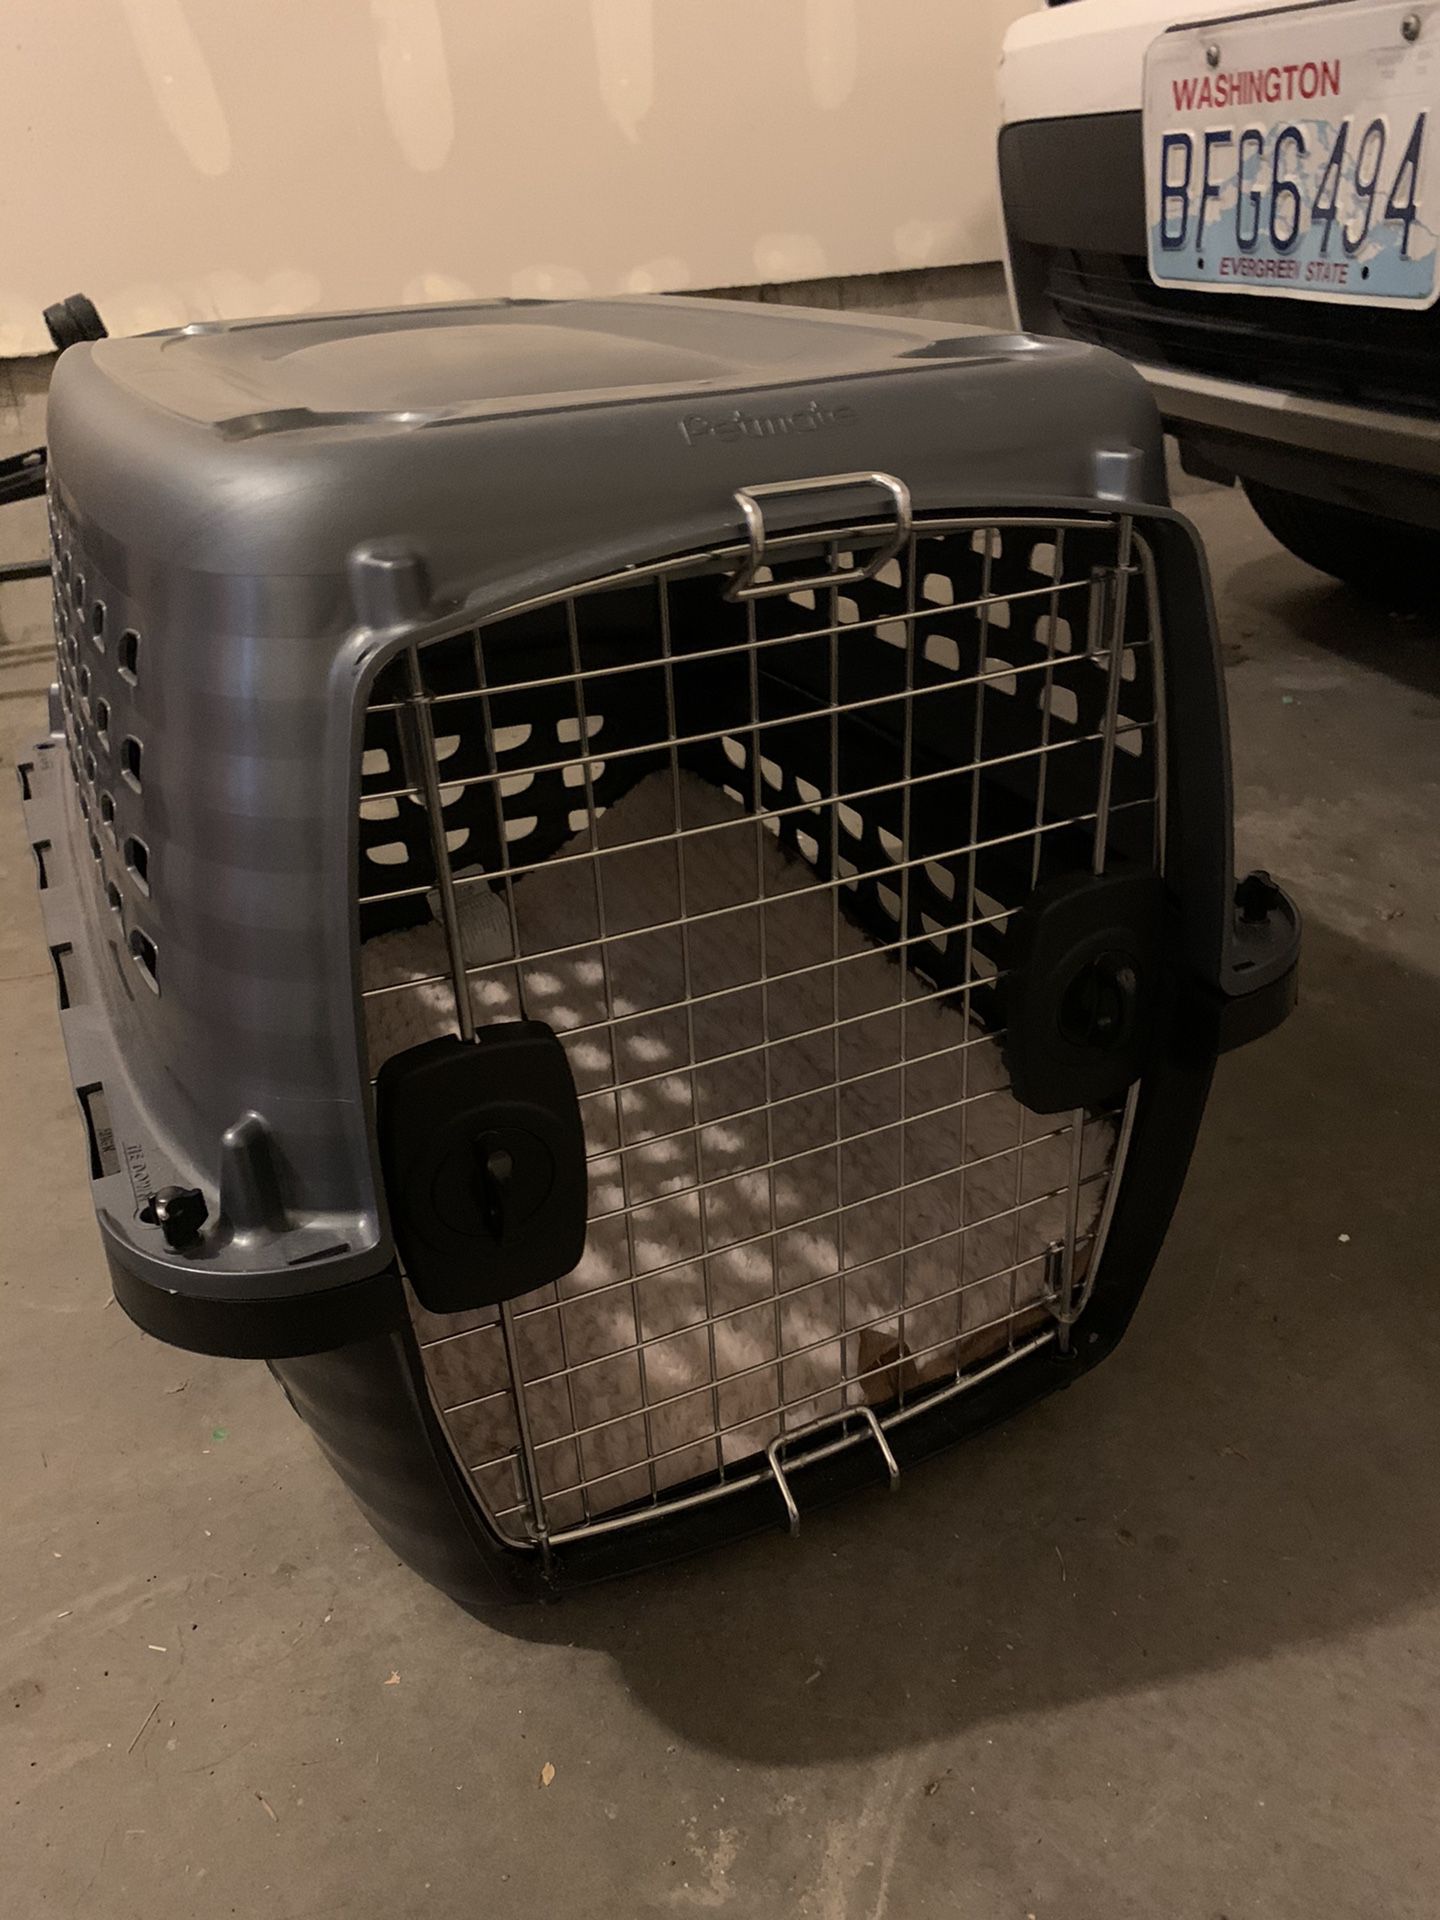 23”x14”x20” dog/animal crate